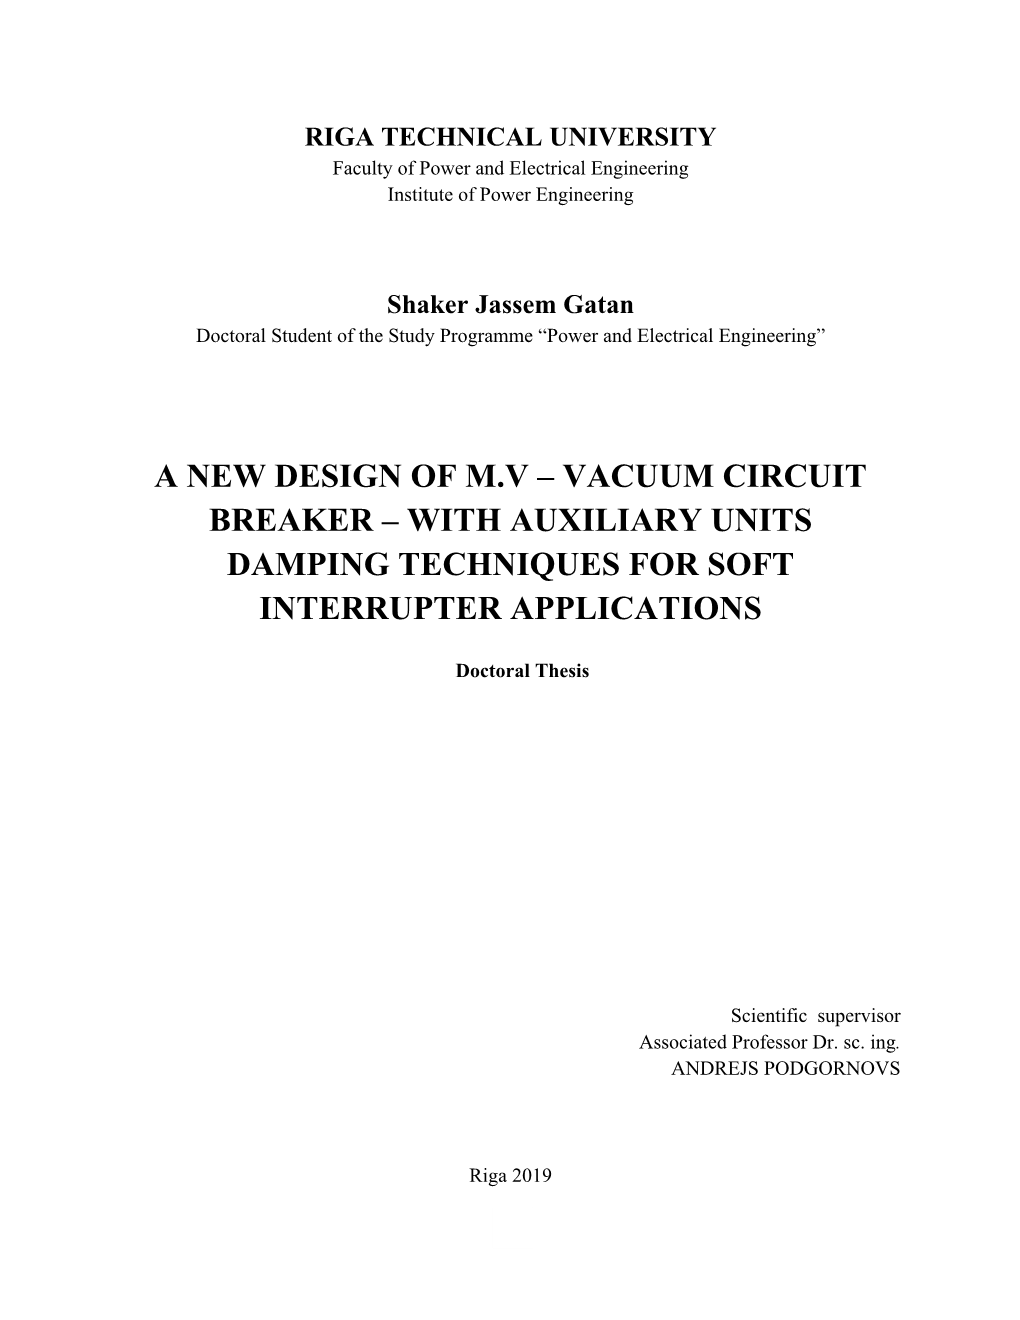 A New Design of Mv – Vacuum Circuit Breaker